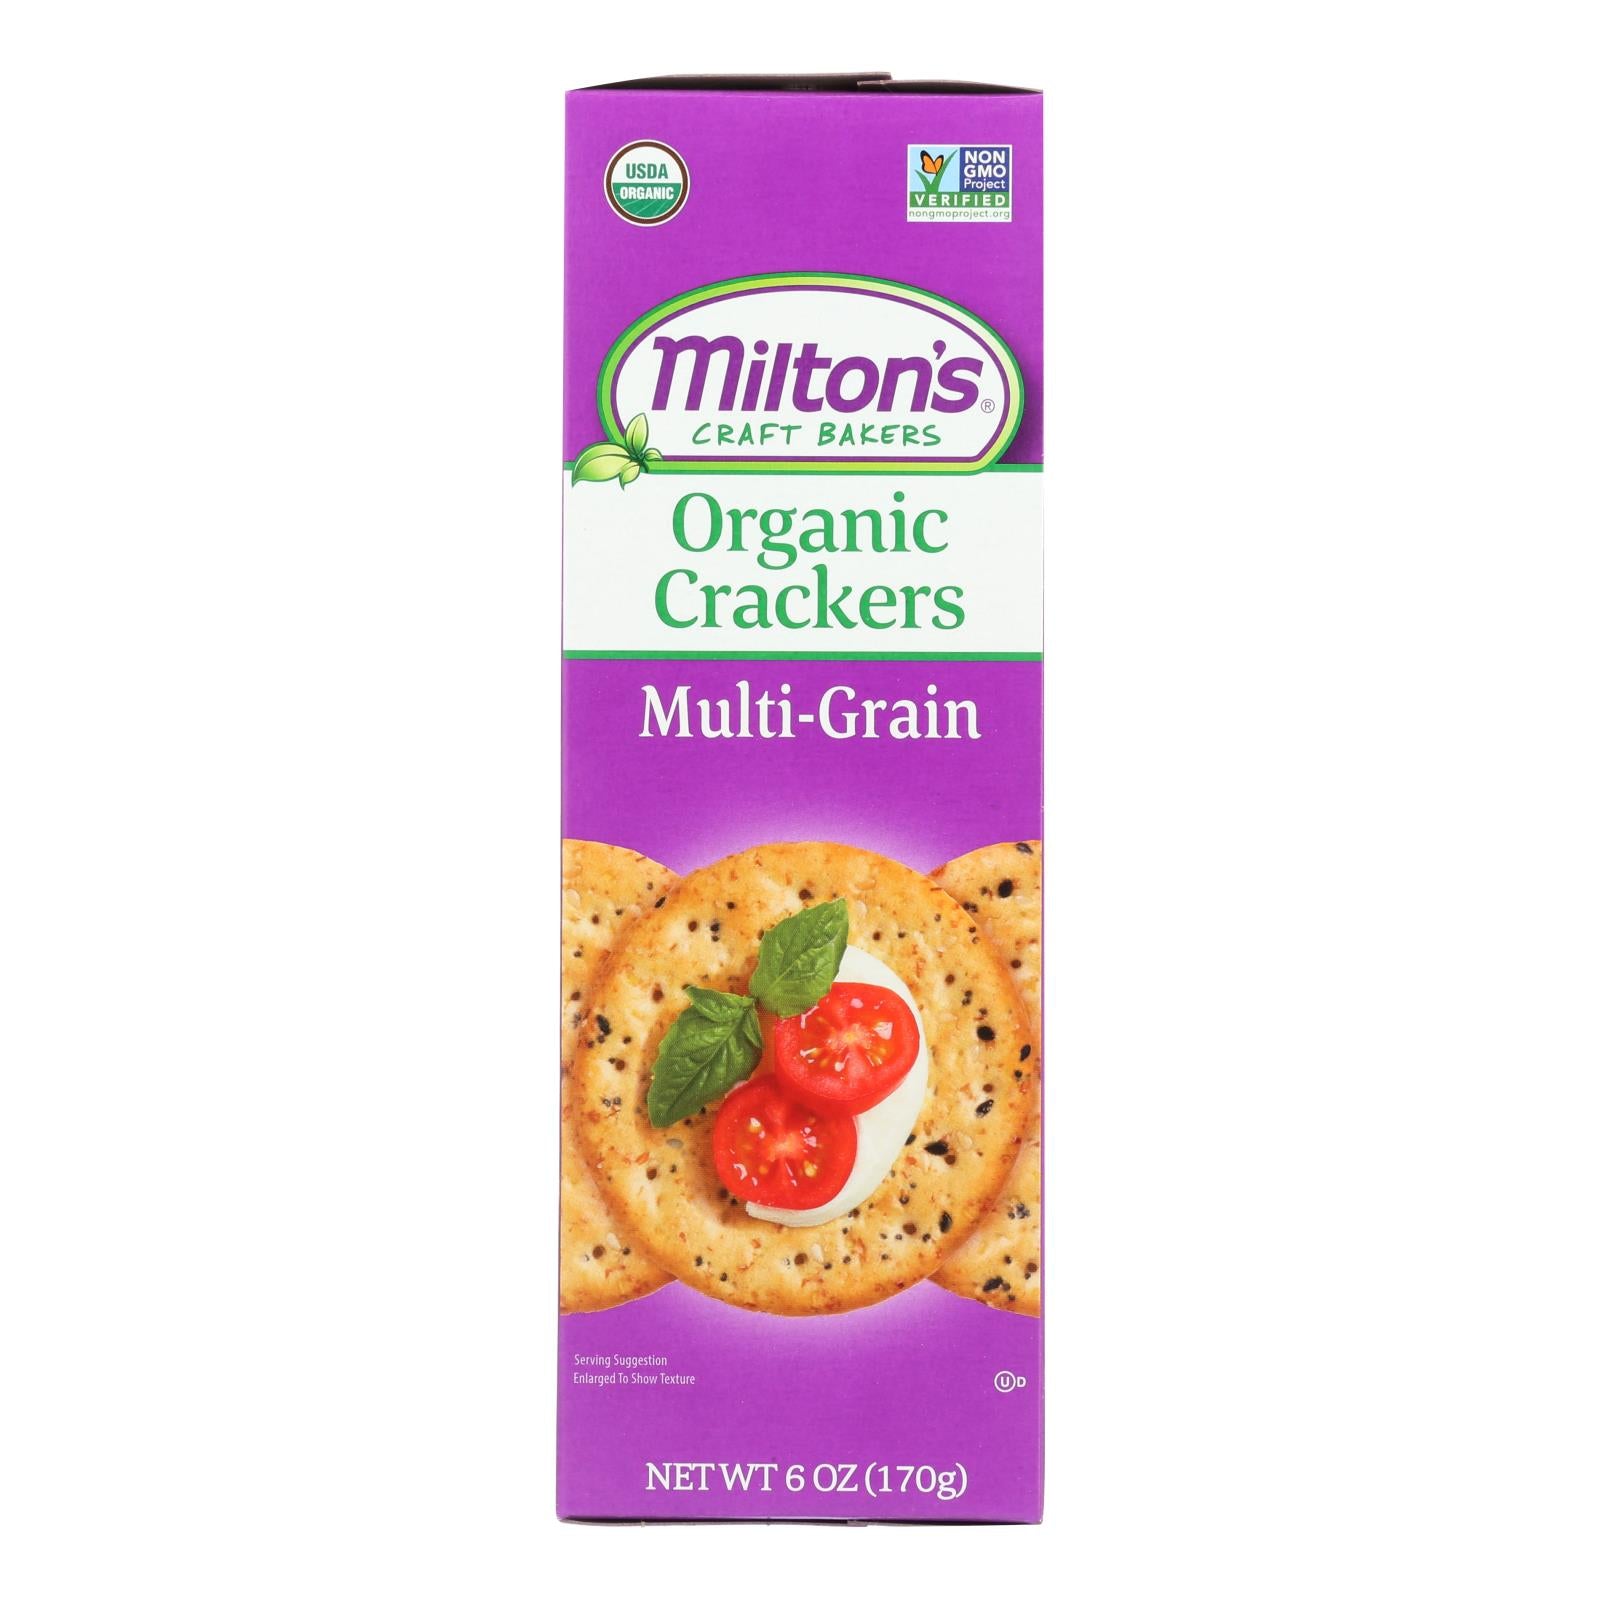 Miltons - Baked Crackers Mltgrn - Case of 8 - 6 OZ